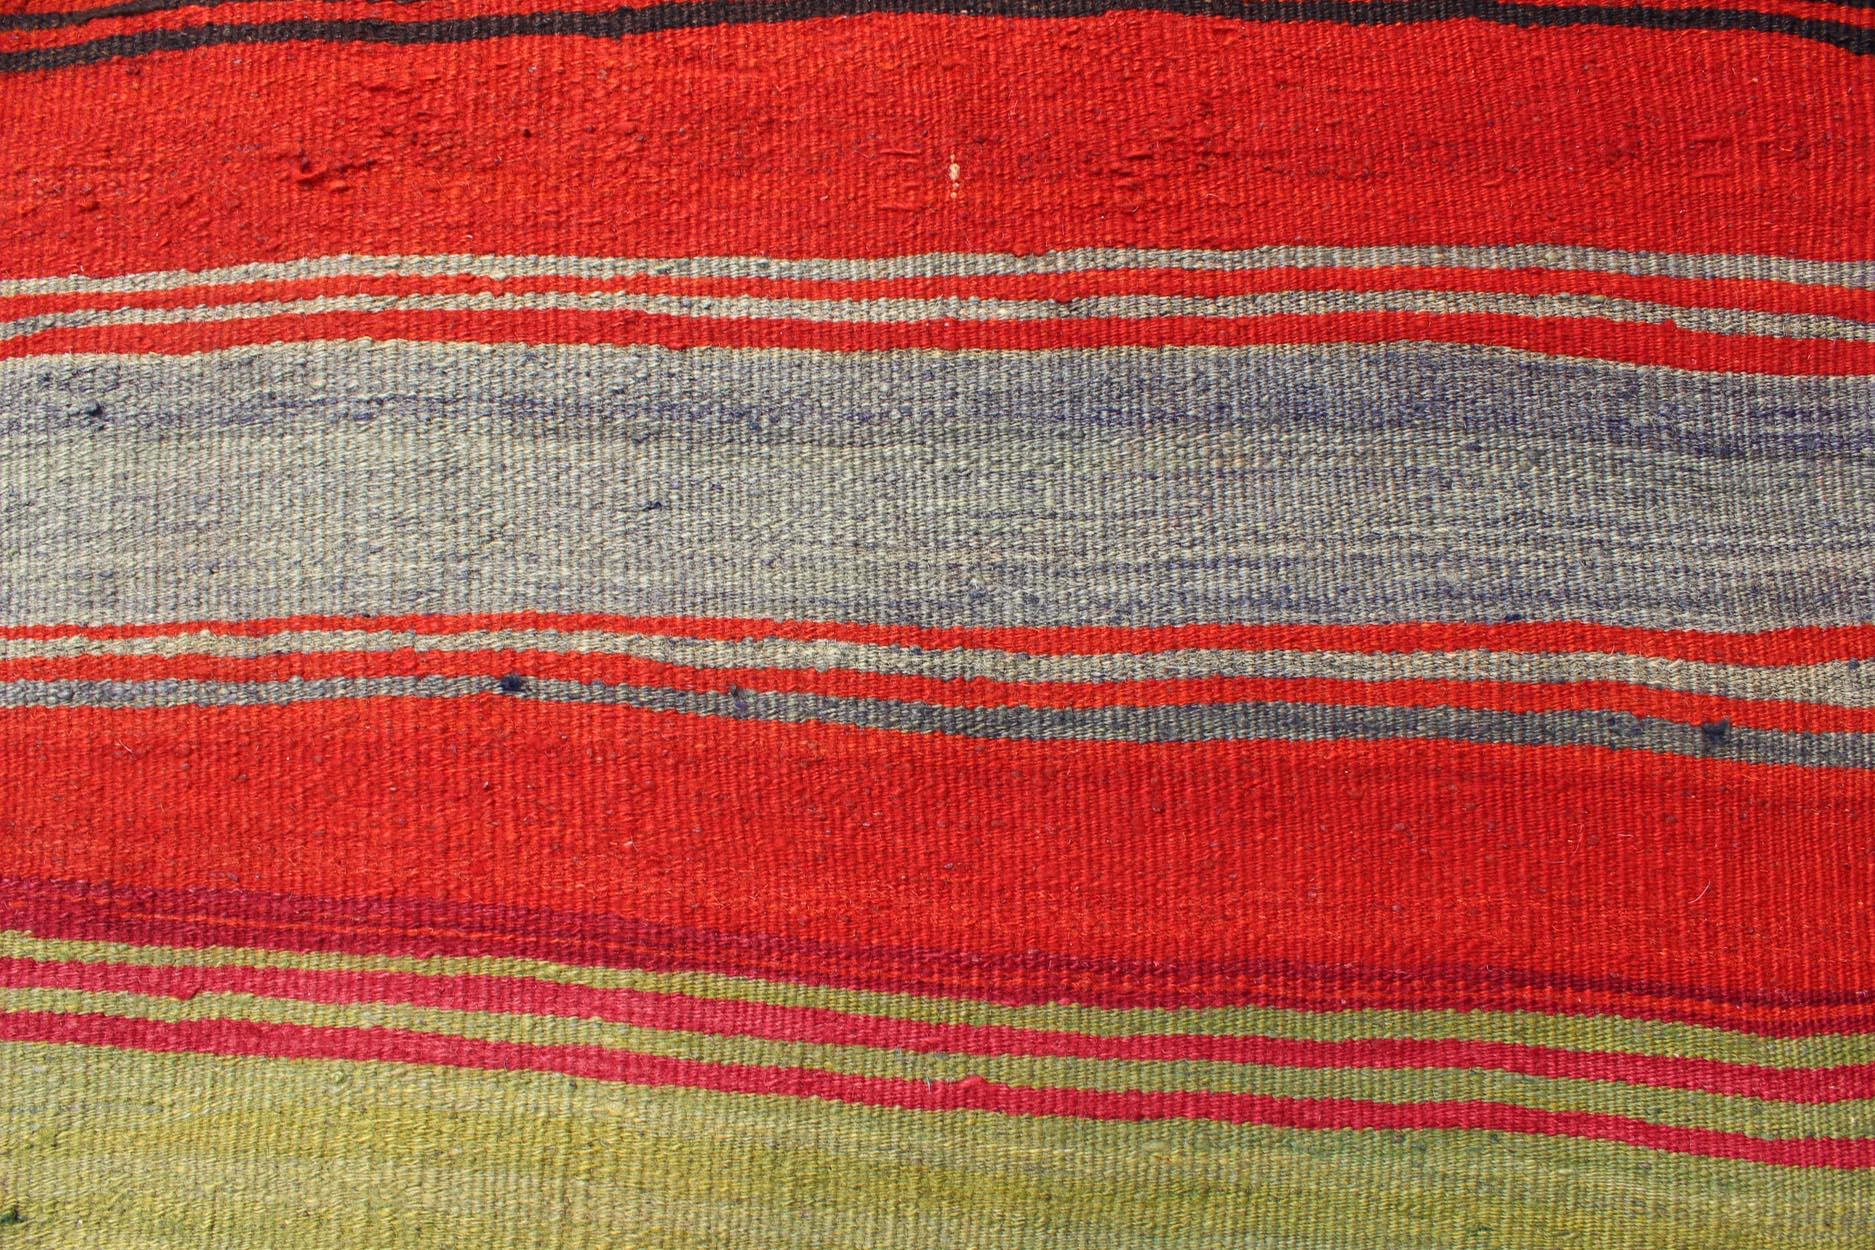 Bright & Colorful Vintage Turkish Kilim Rug in Stripes Design with Vivid Colors For Sale 3